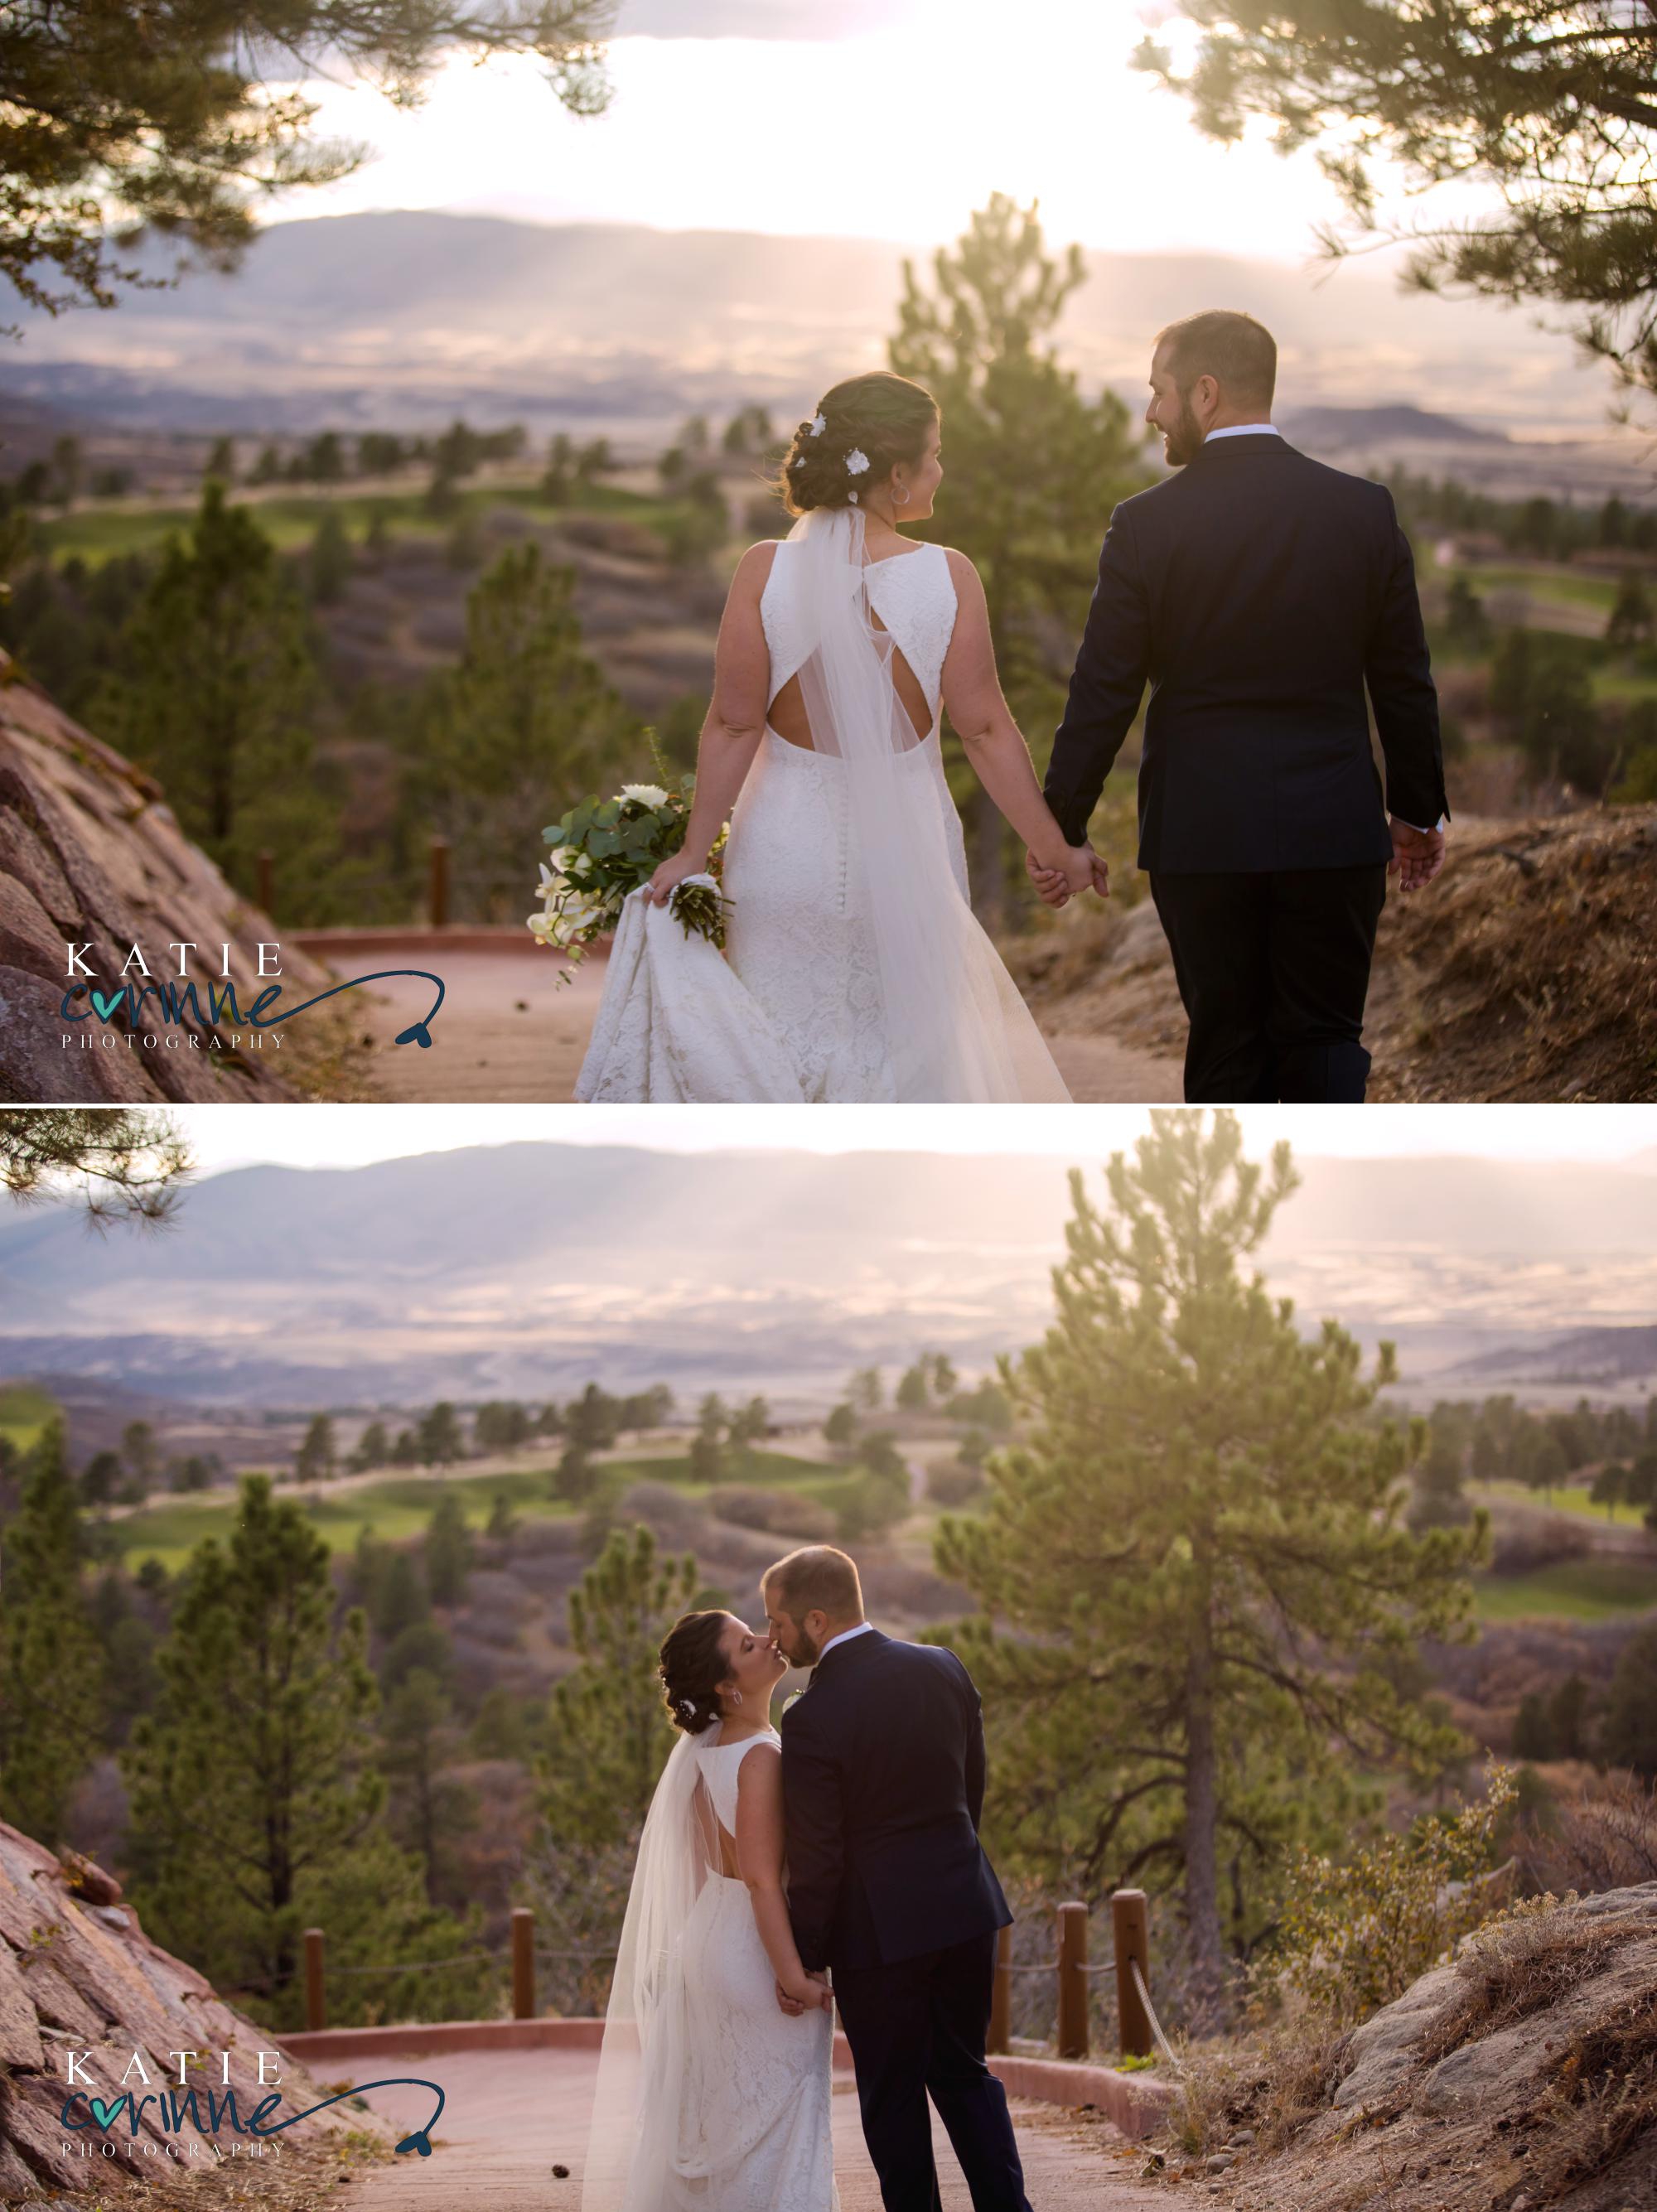 Colorado sunset newlywed portraits